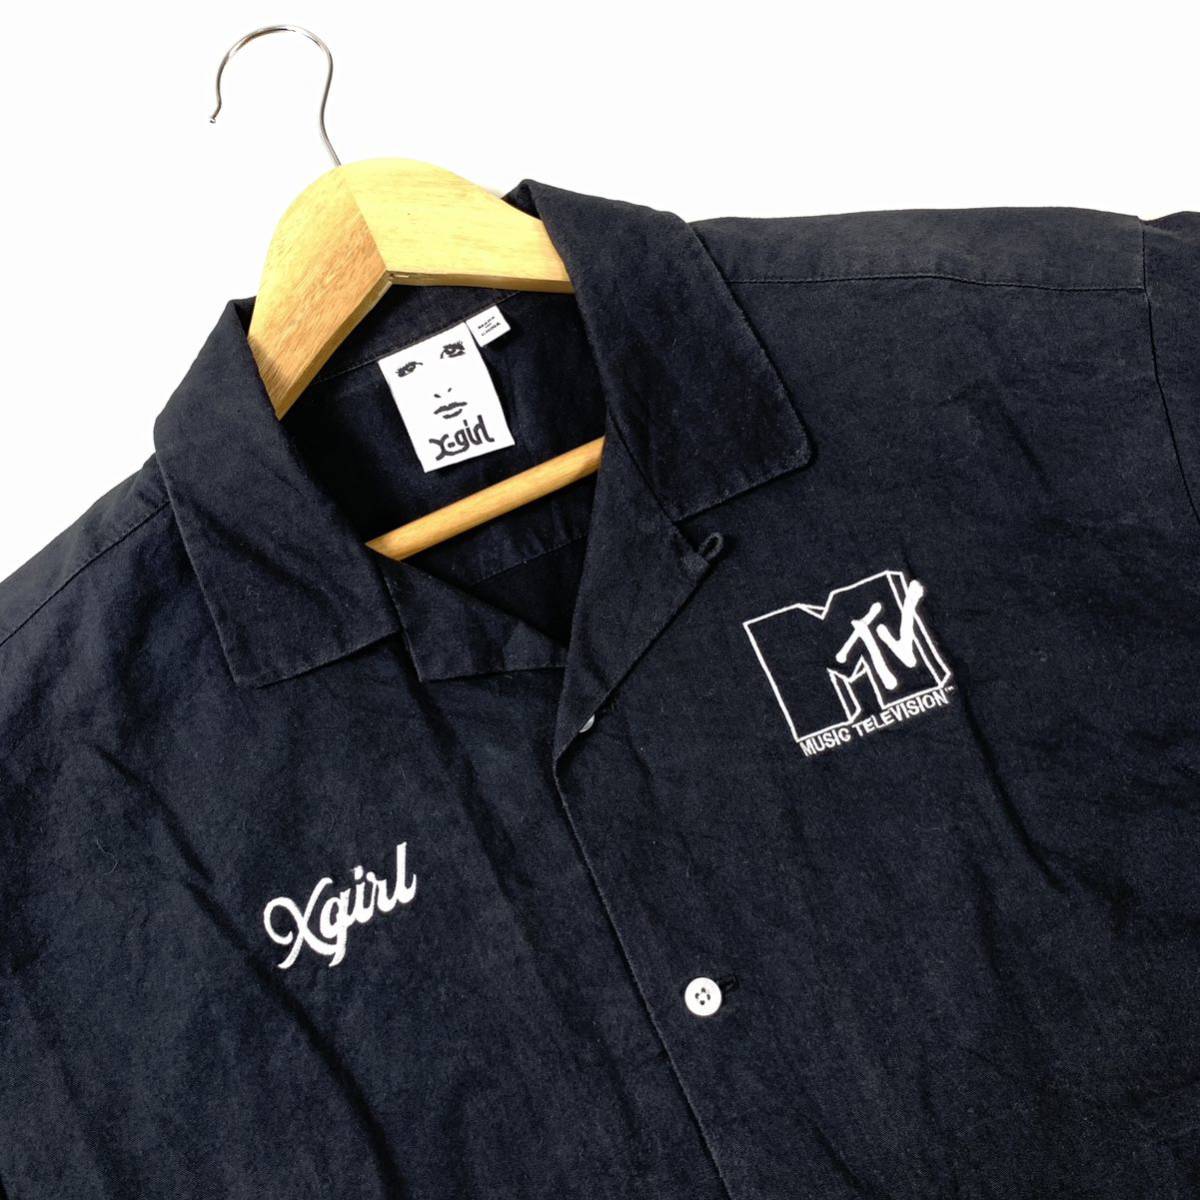 X-girl X-girl short sleeves shirt black embroidery 2 YS532